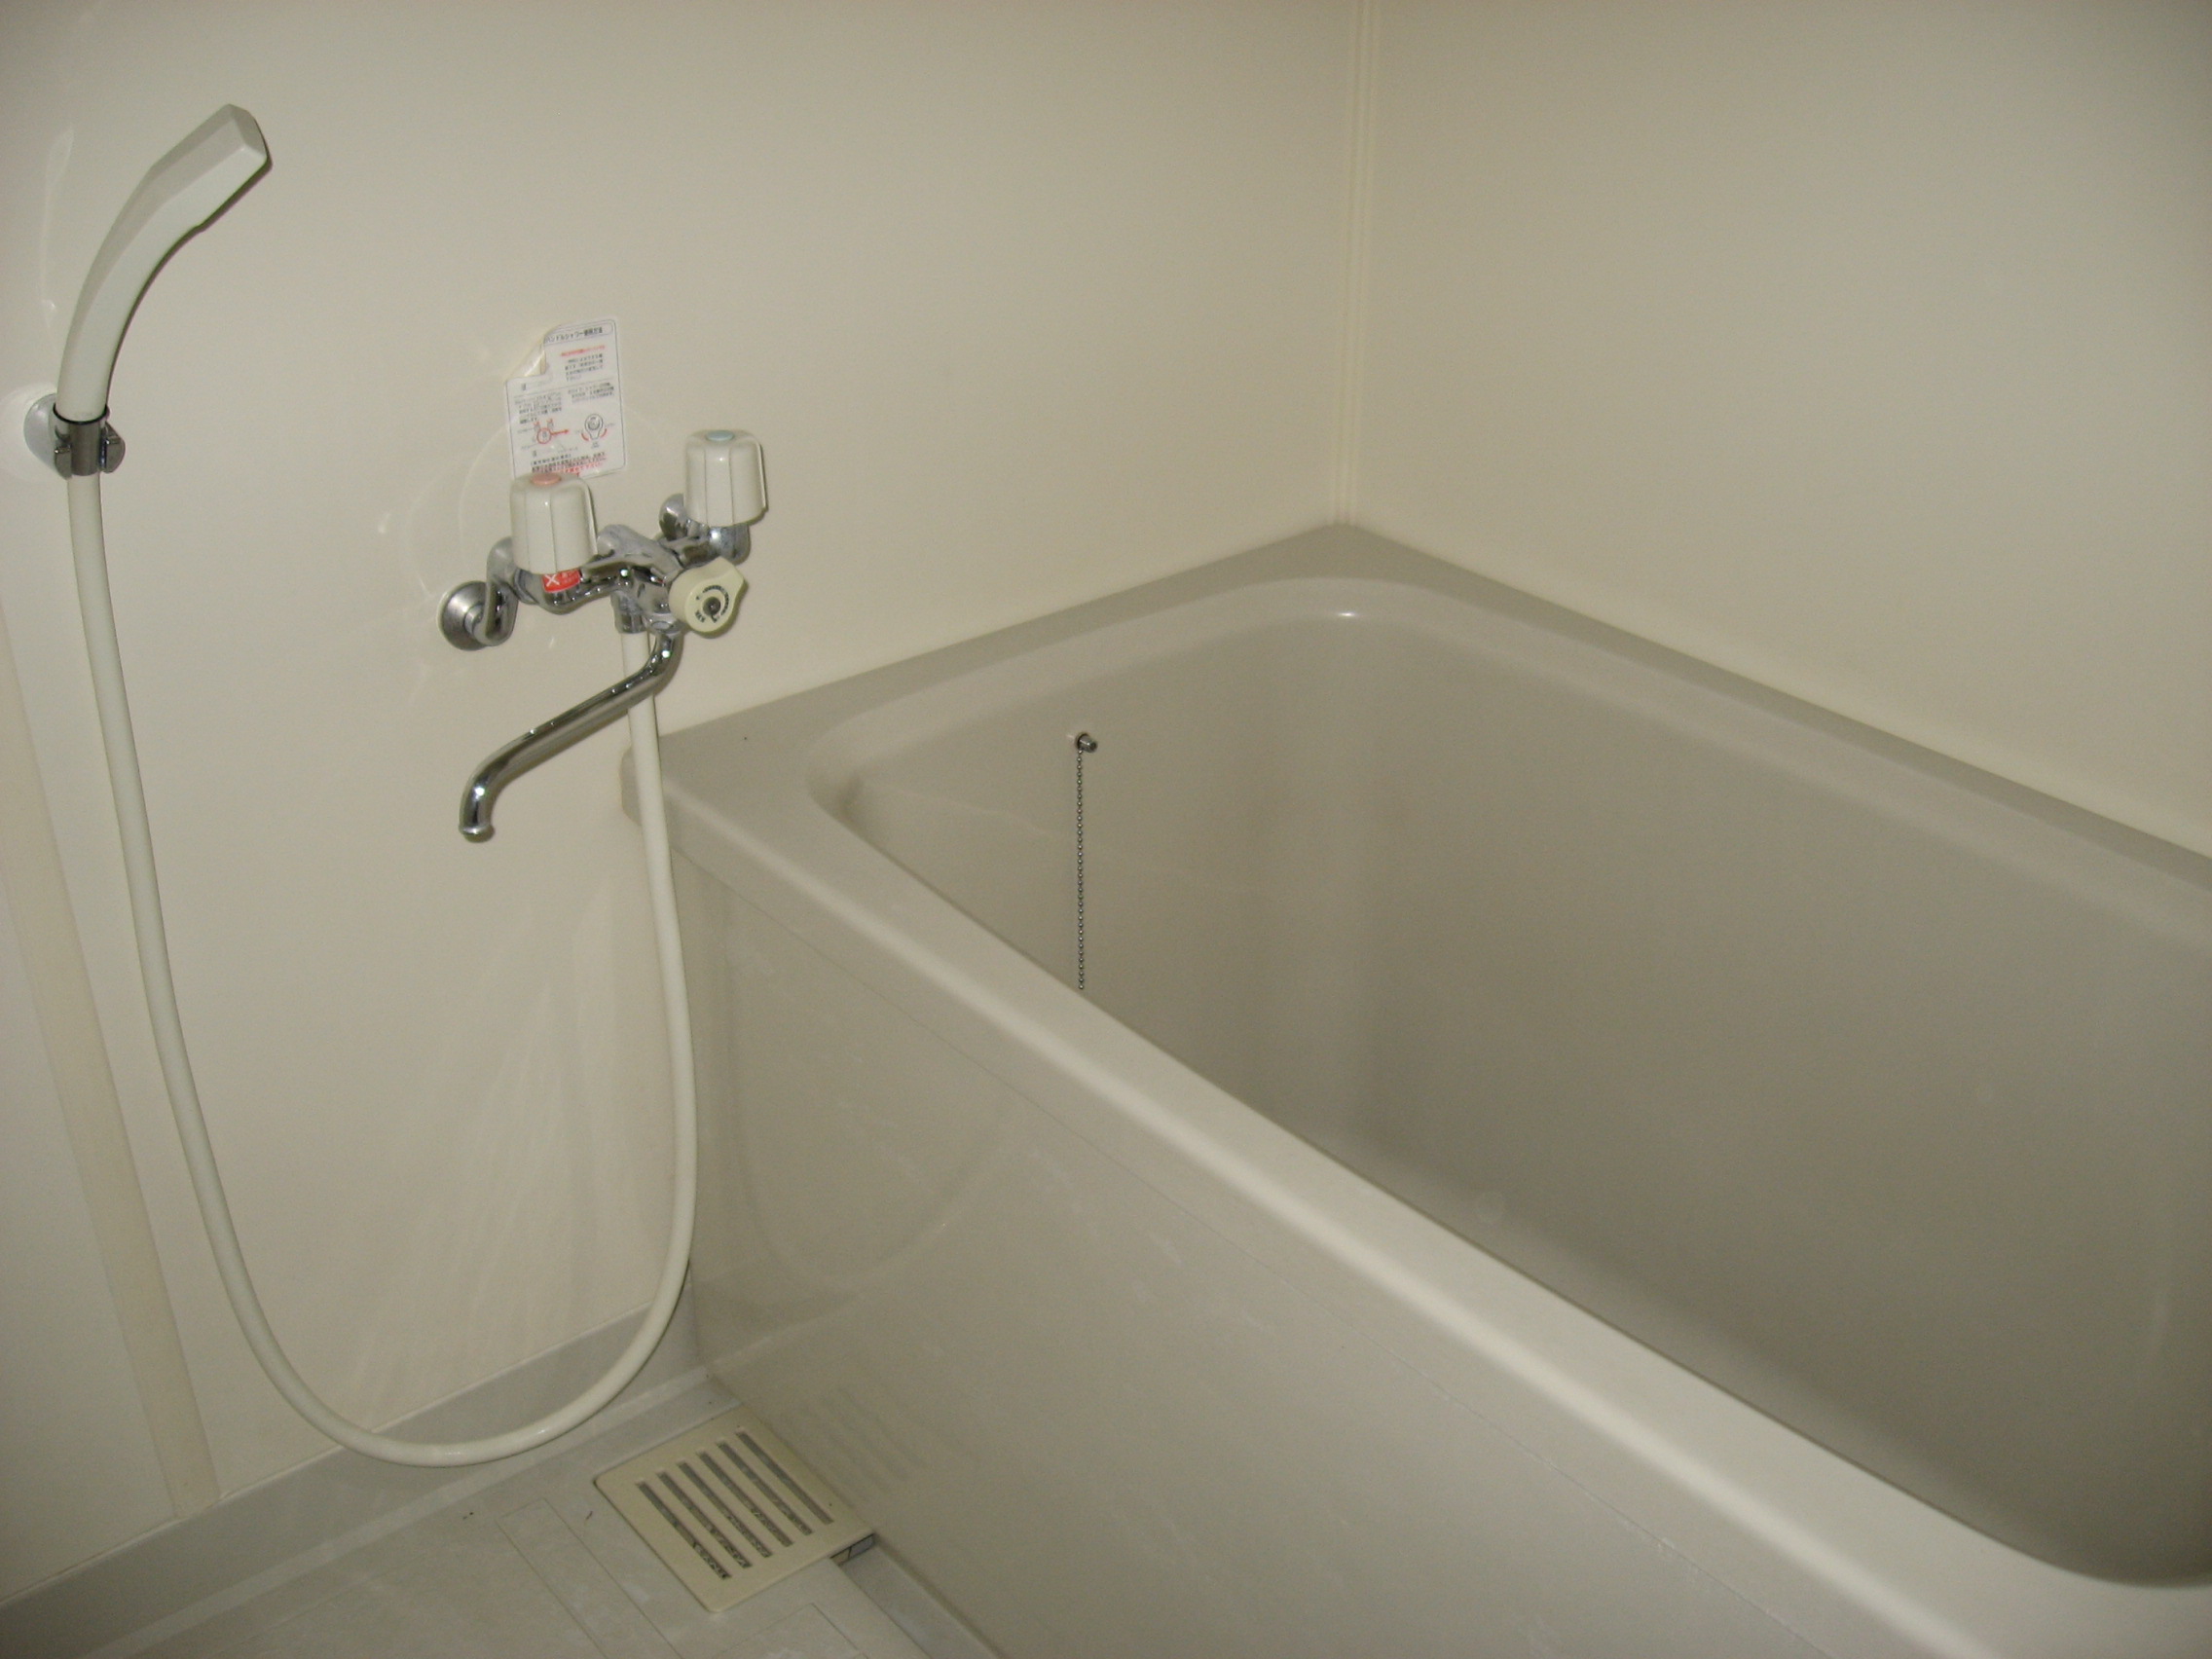 Bath. Automatic hot water beam